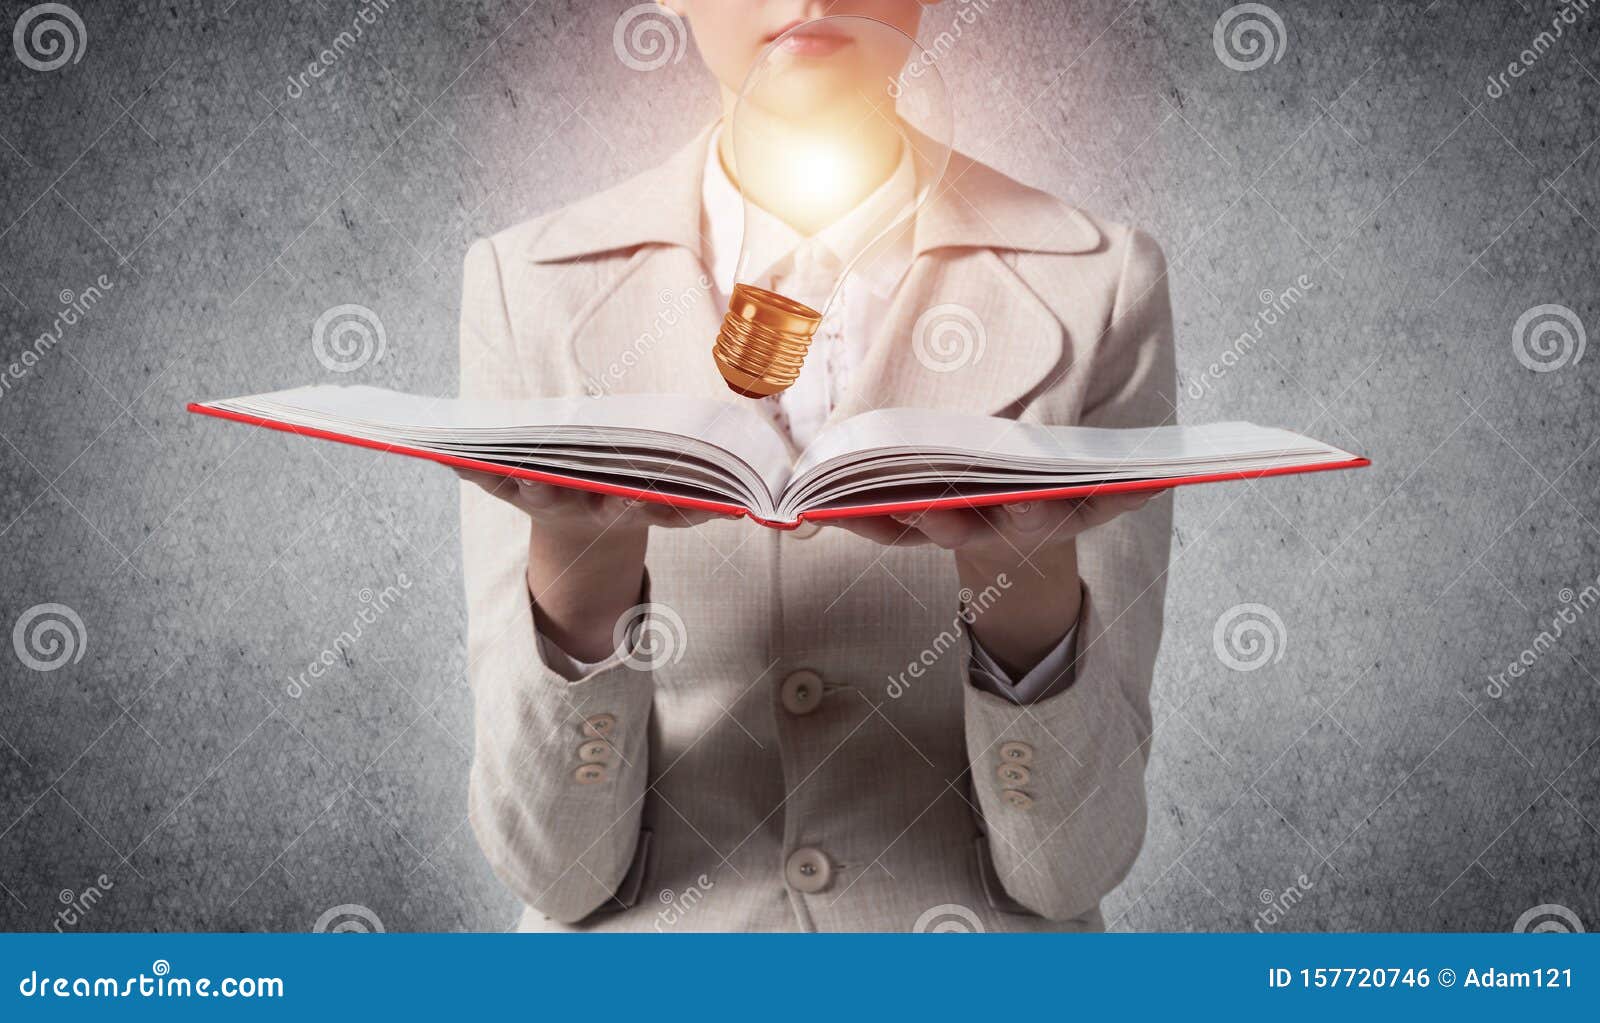 woman showing shining light bulb on open book